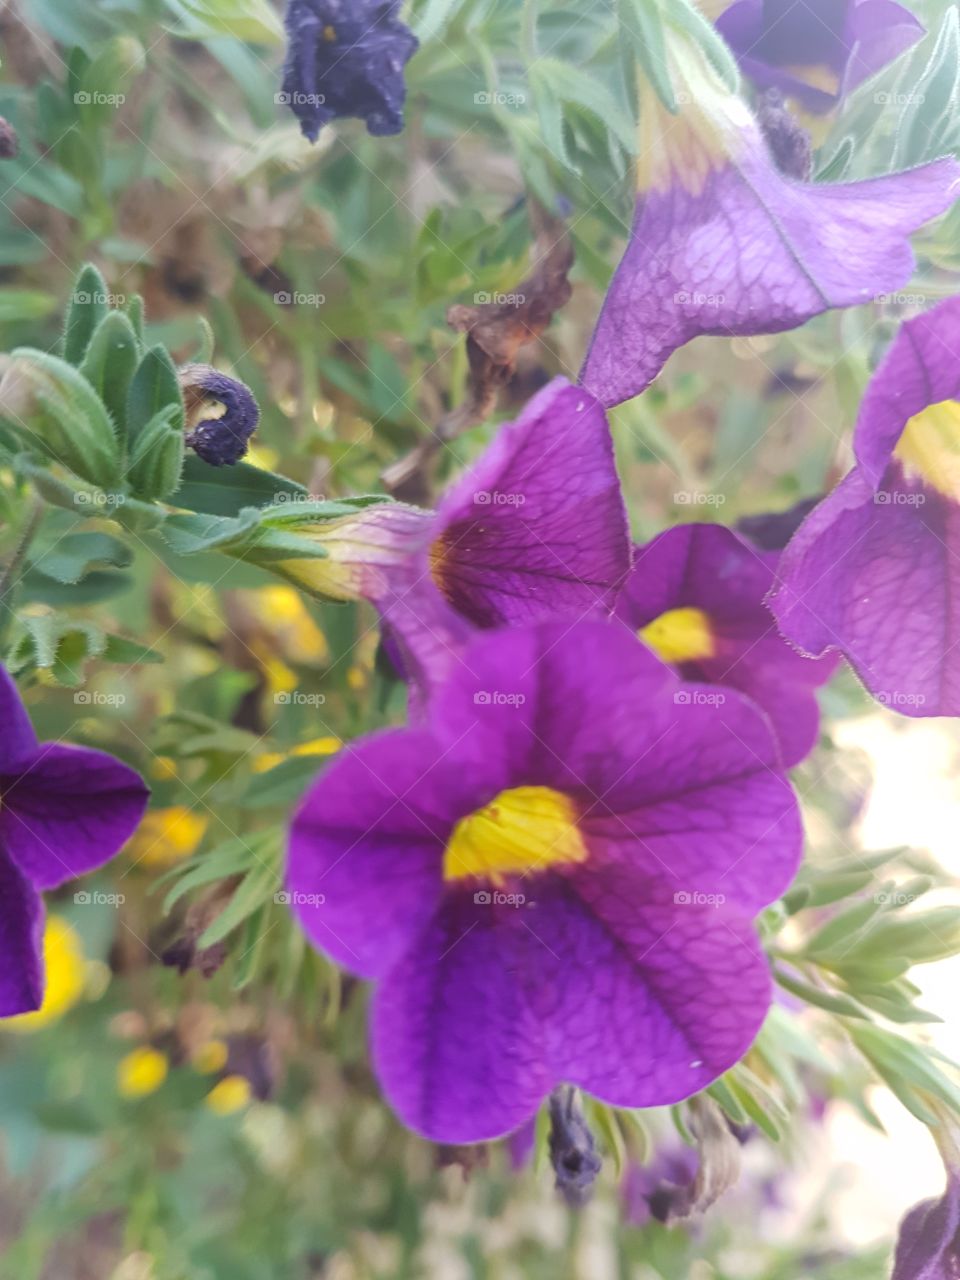 Some beautiful purple flowers.